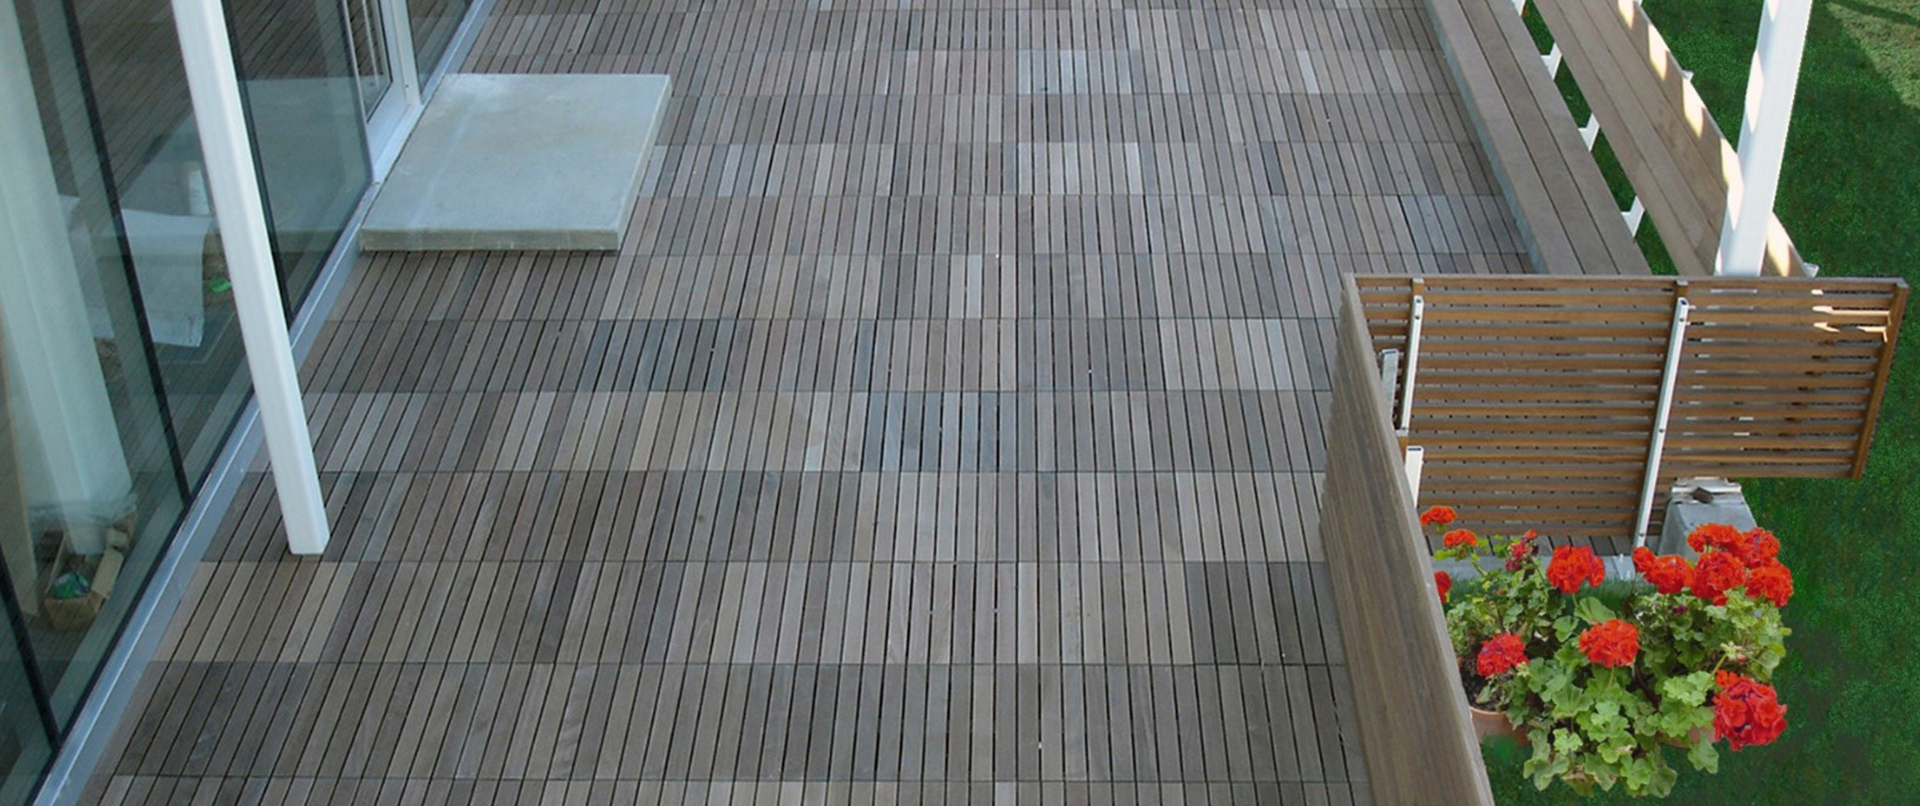 Wood Tile Rooftop Deck